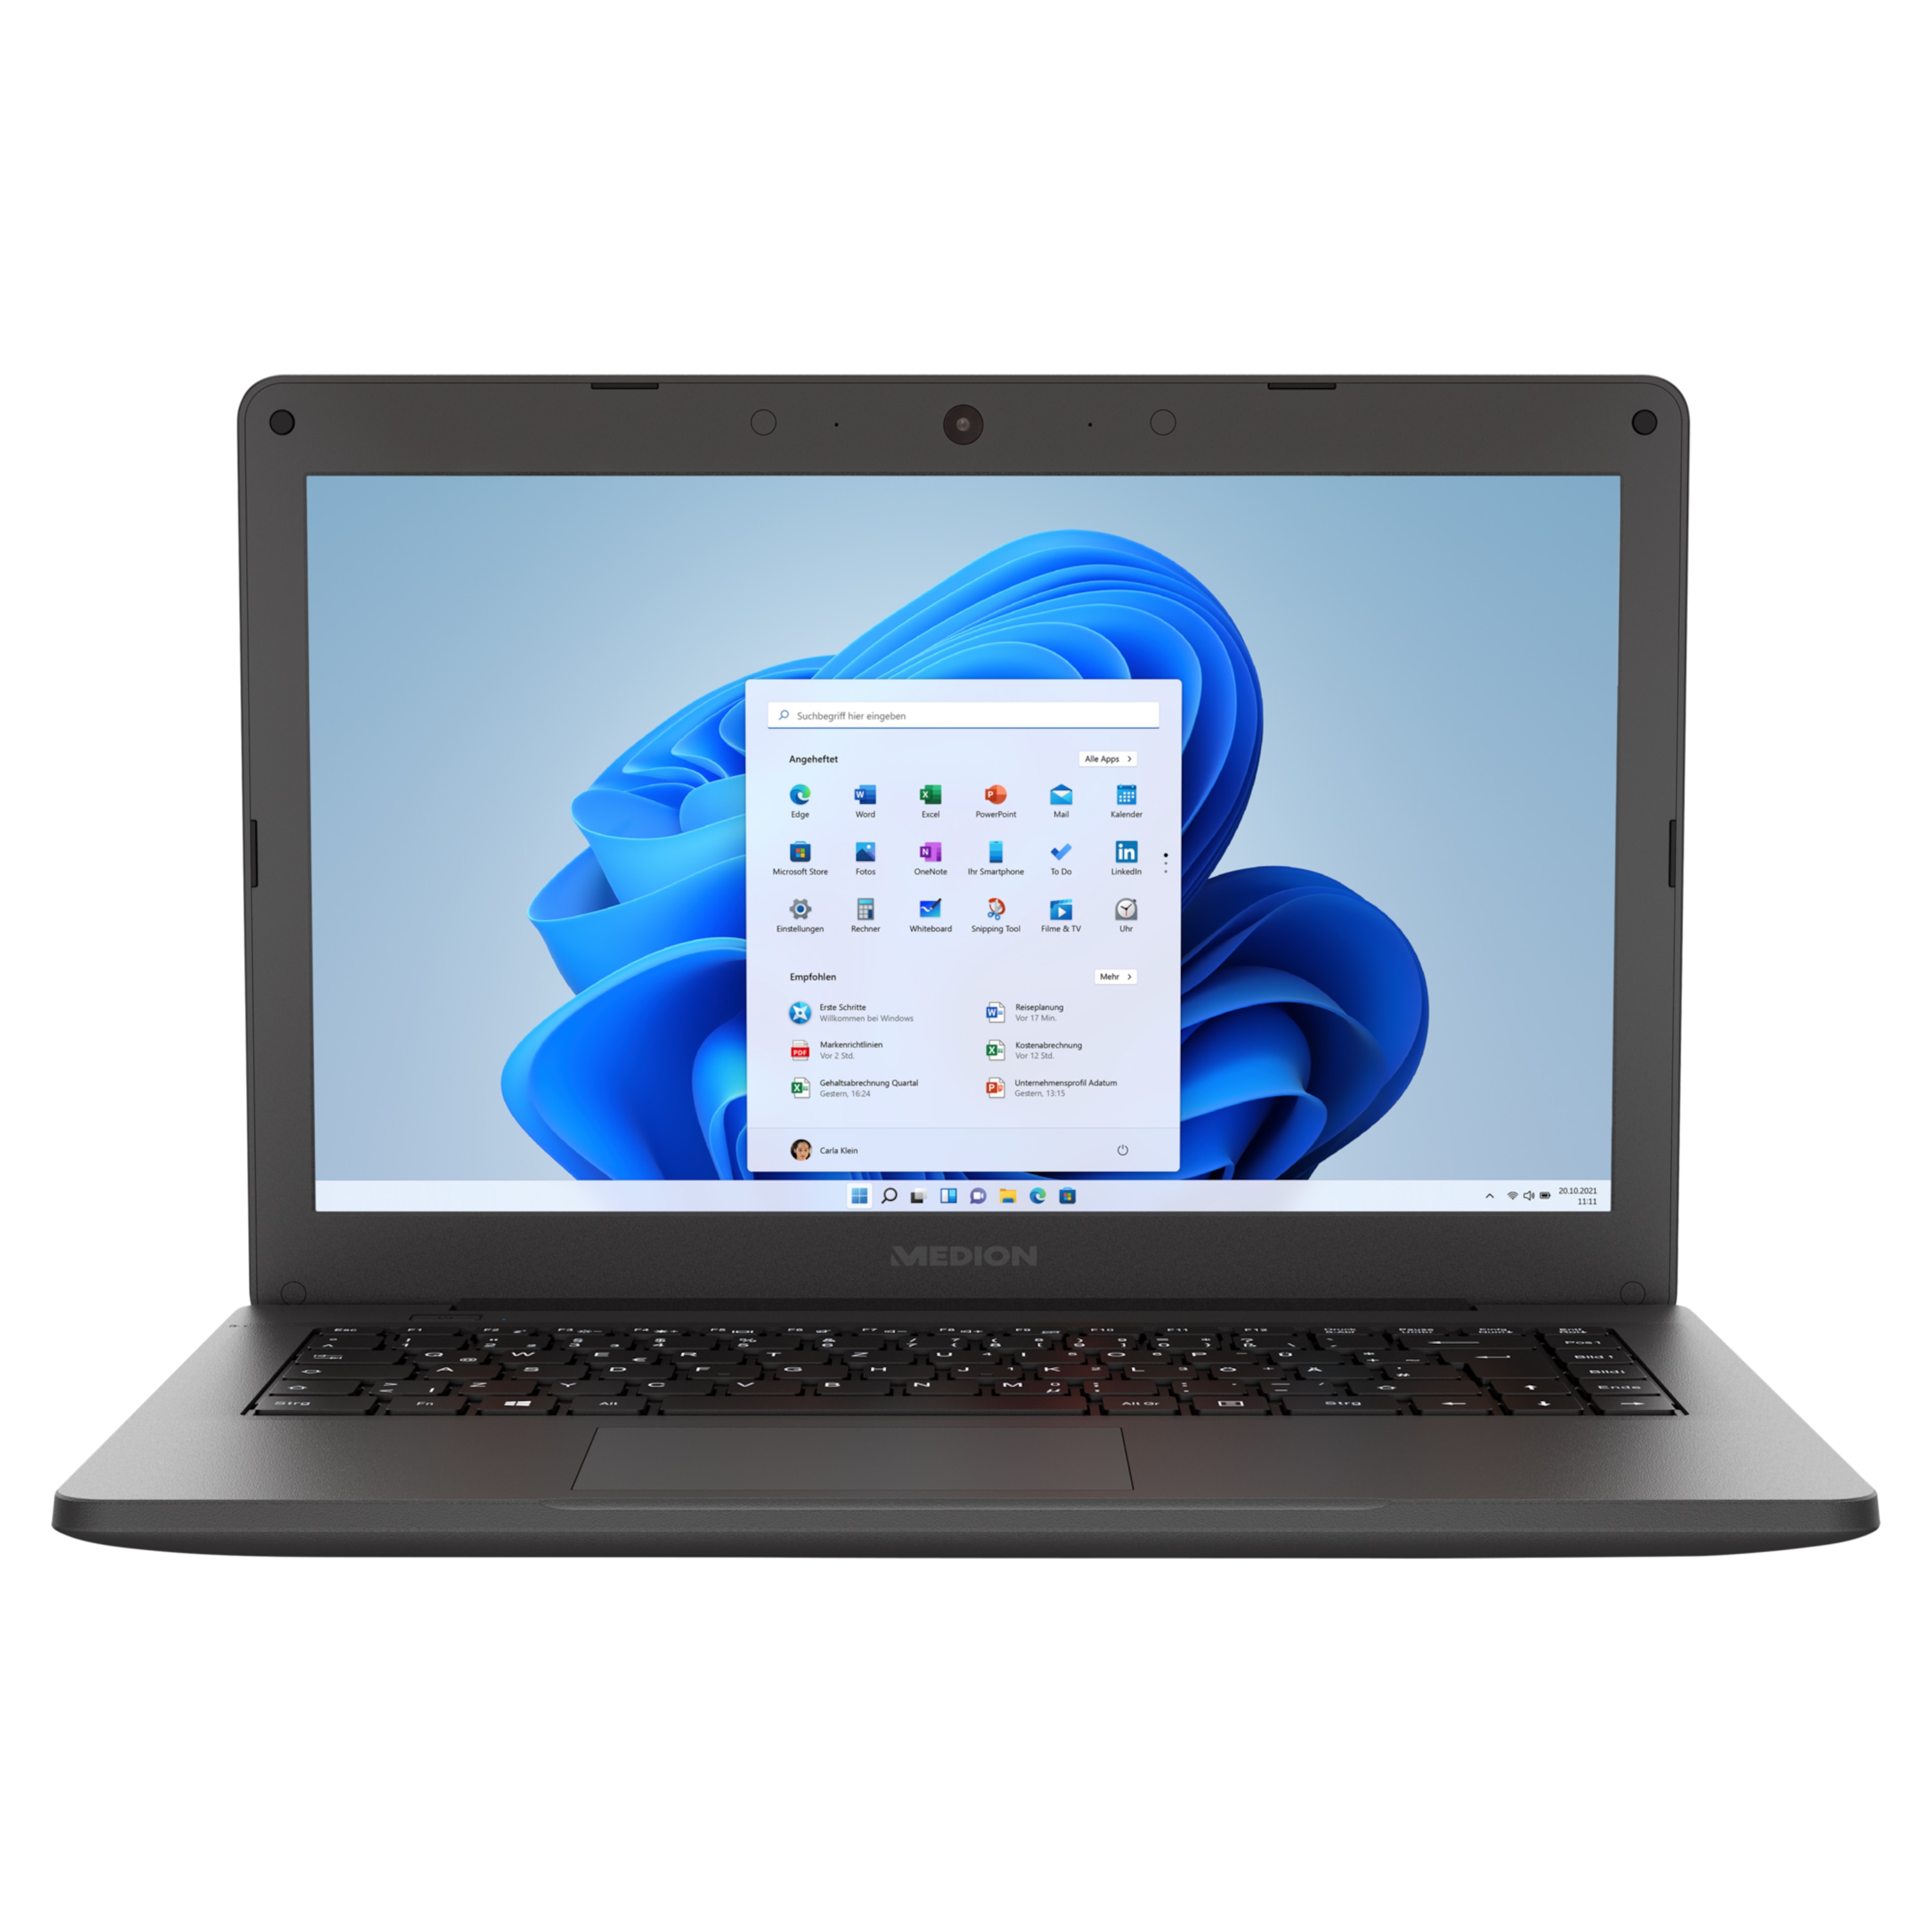 AKOYA E14409 laptop | Intel Core i3 | Windows 10 Home (S mode) | 14 inch HD | Ultra HD Graphic